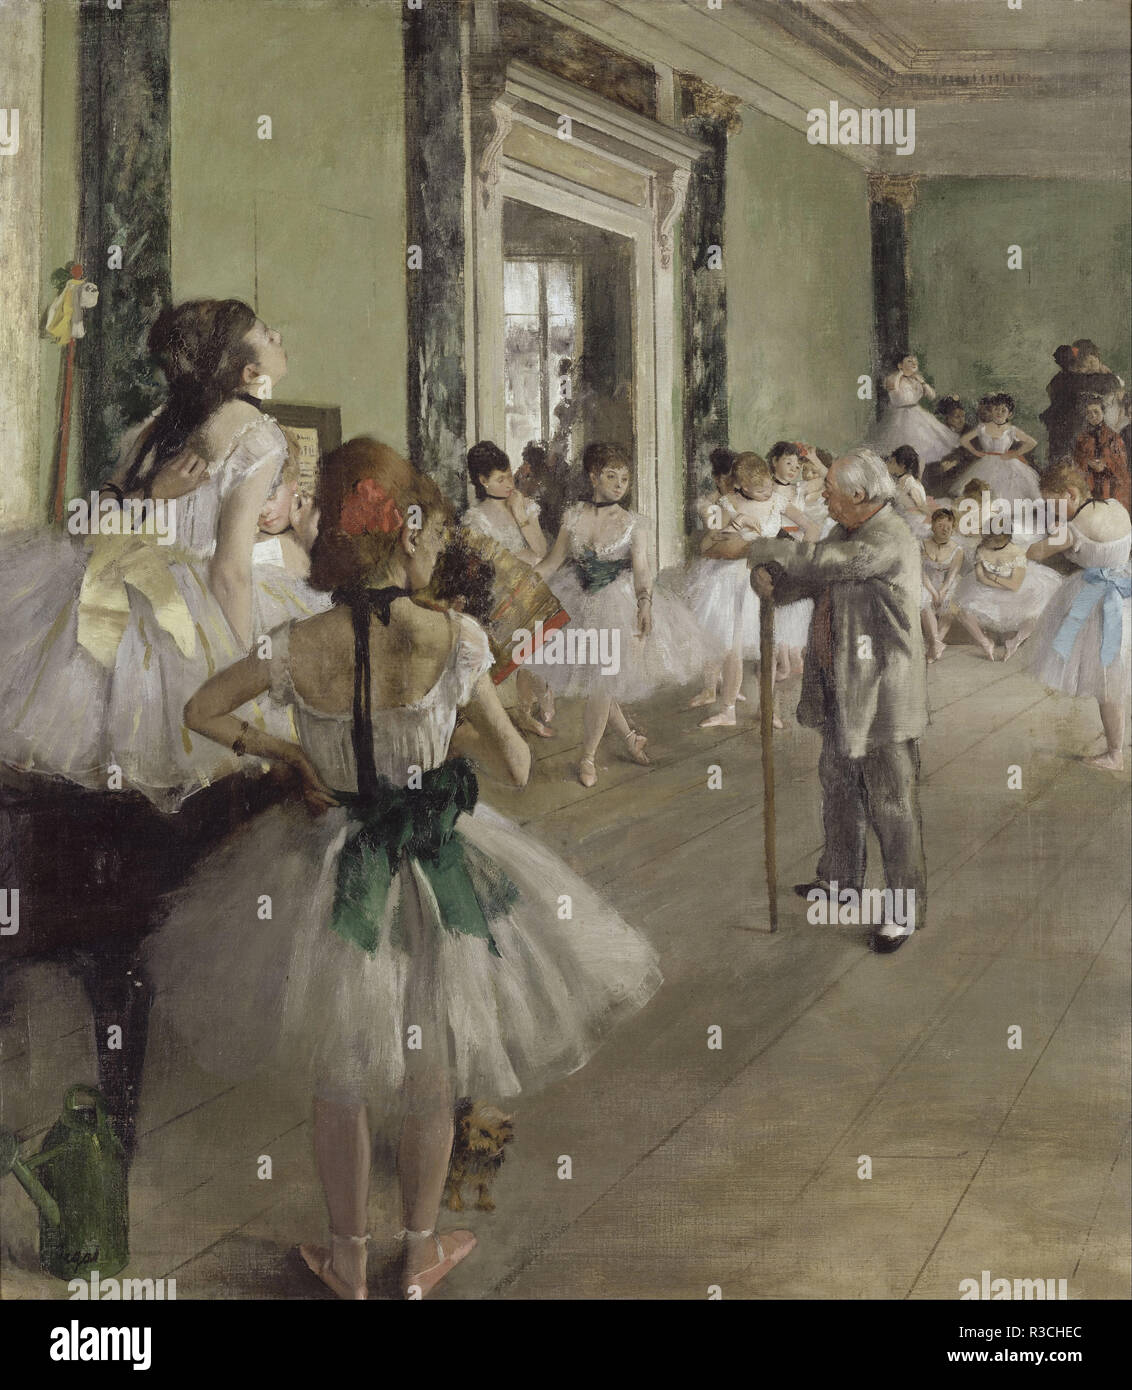 La Classe de danse The Ballet Class. Date/Period: 1871 - 1874. Painting. Oil on canvas. Height: 850 mm (33.46 in); Width: 750 mm (29.52 in). Author: EDGAR DEGAS. DEGAS, EDGAR. Stock Photo